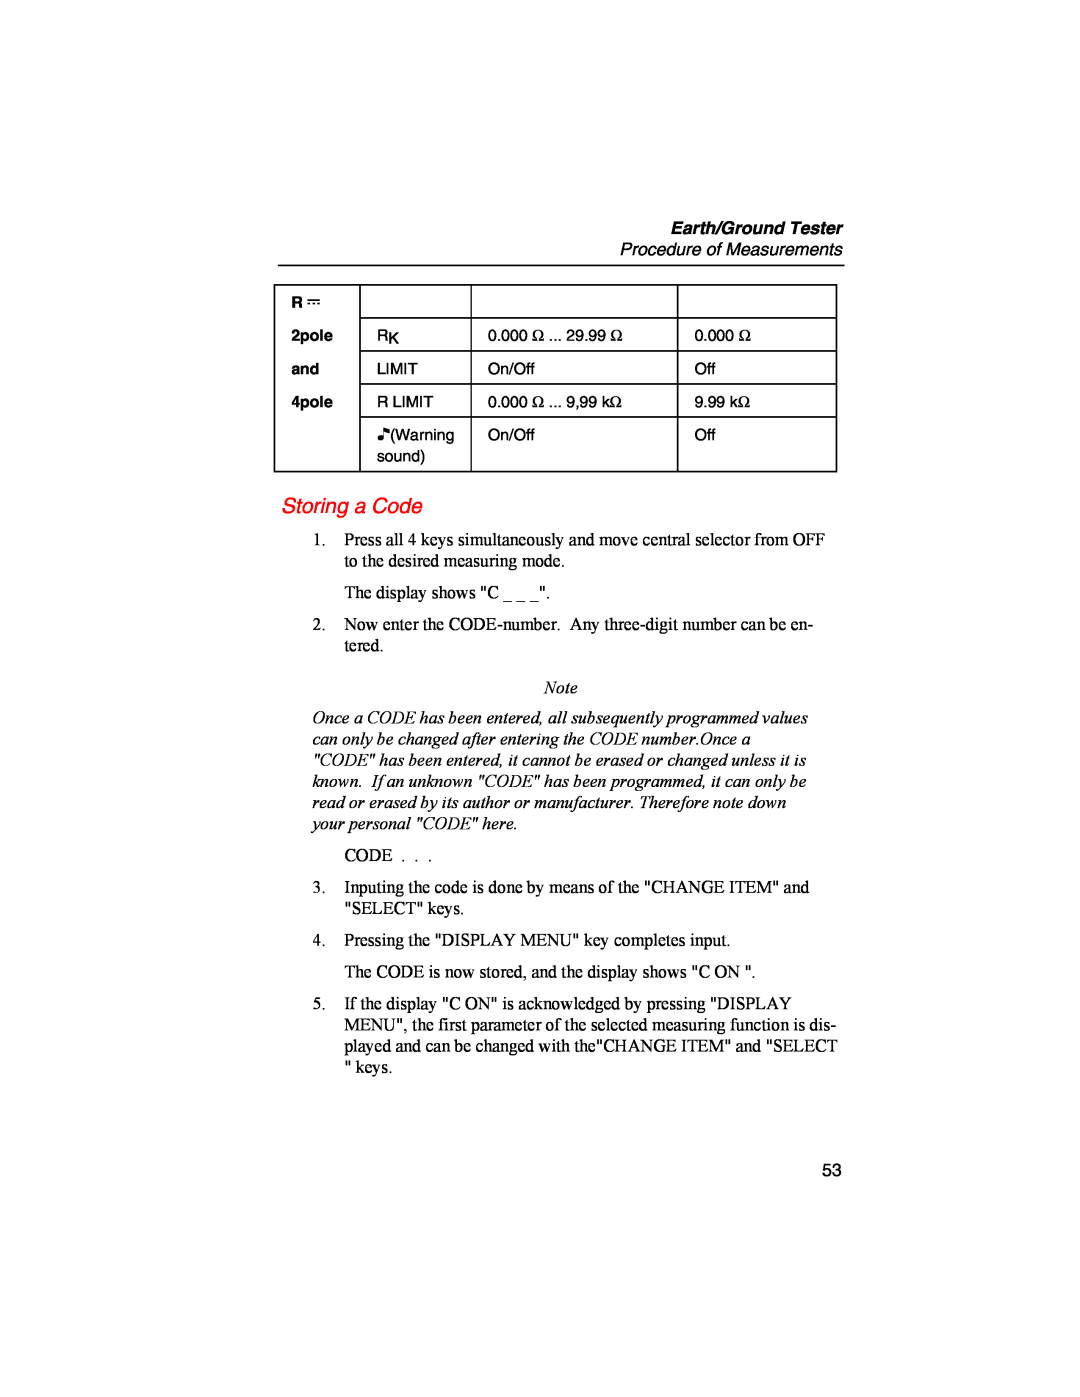 Fluke 1625 user manual Storing a Code, Earth/Ground Tester, Procedure of Measurements 